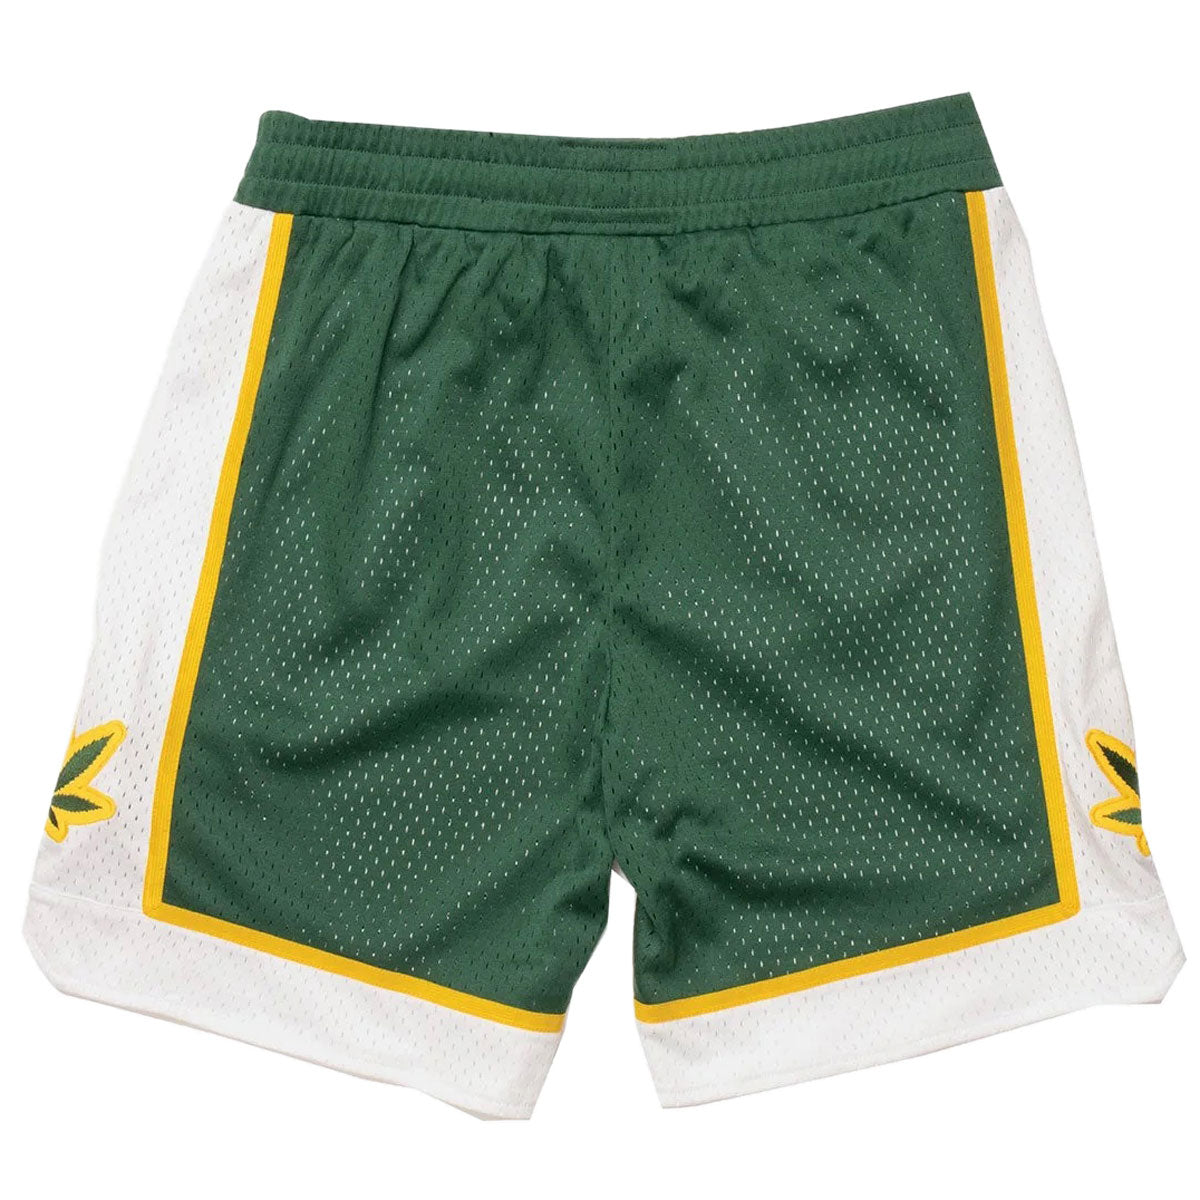 DGK Team Indica Basketball Shorts - Green image 2